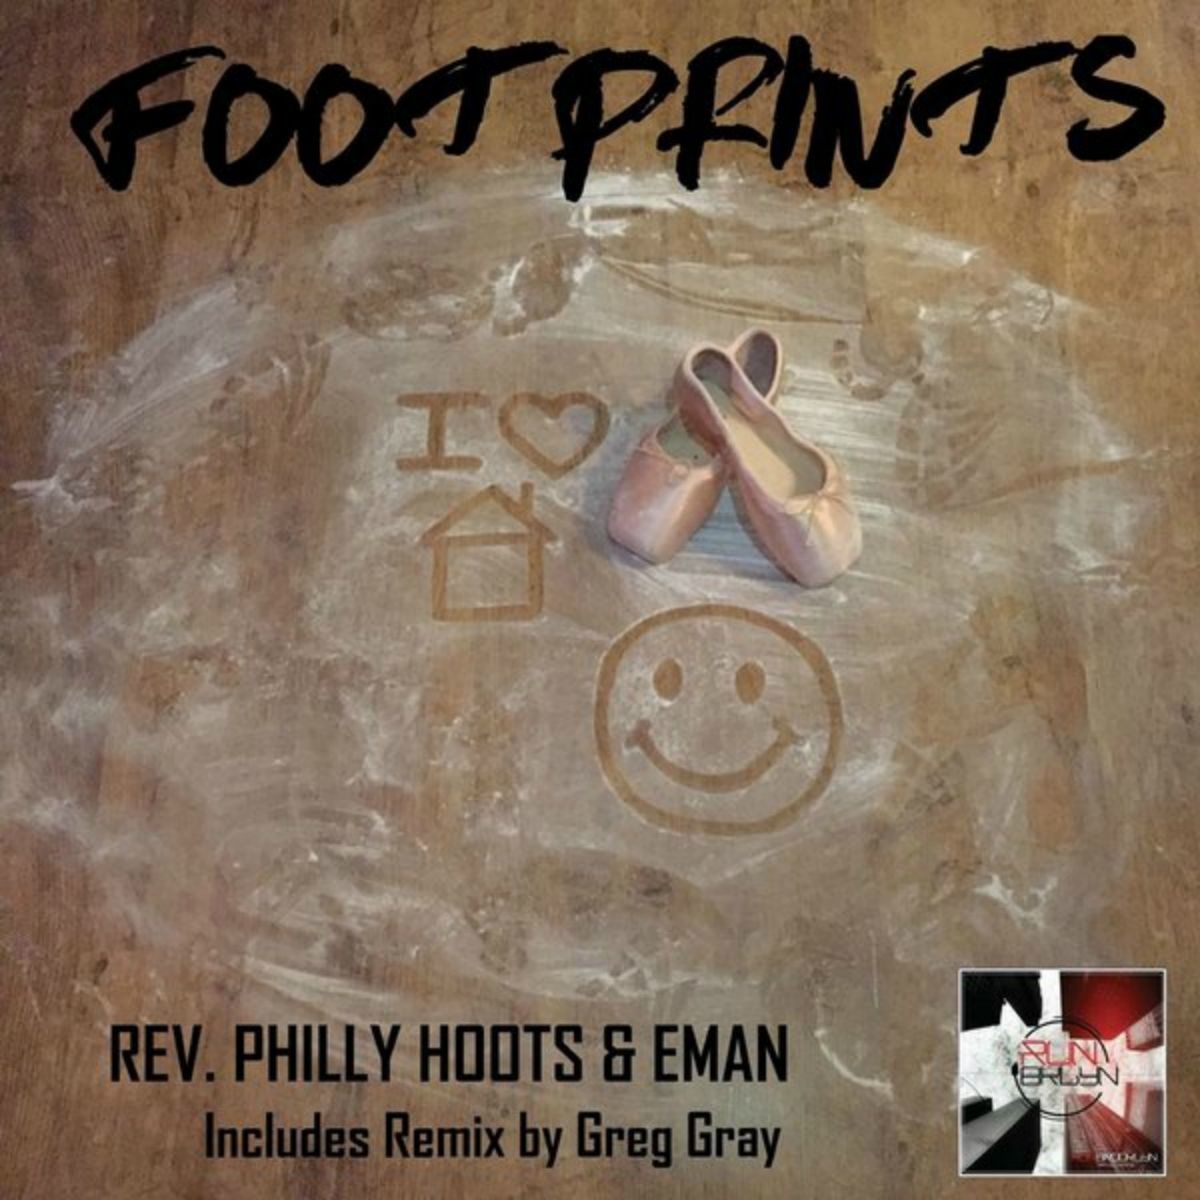 The Rev. Philly Hoots & Eman - Footprints / Run Bklyn Trax Company